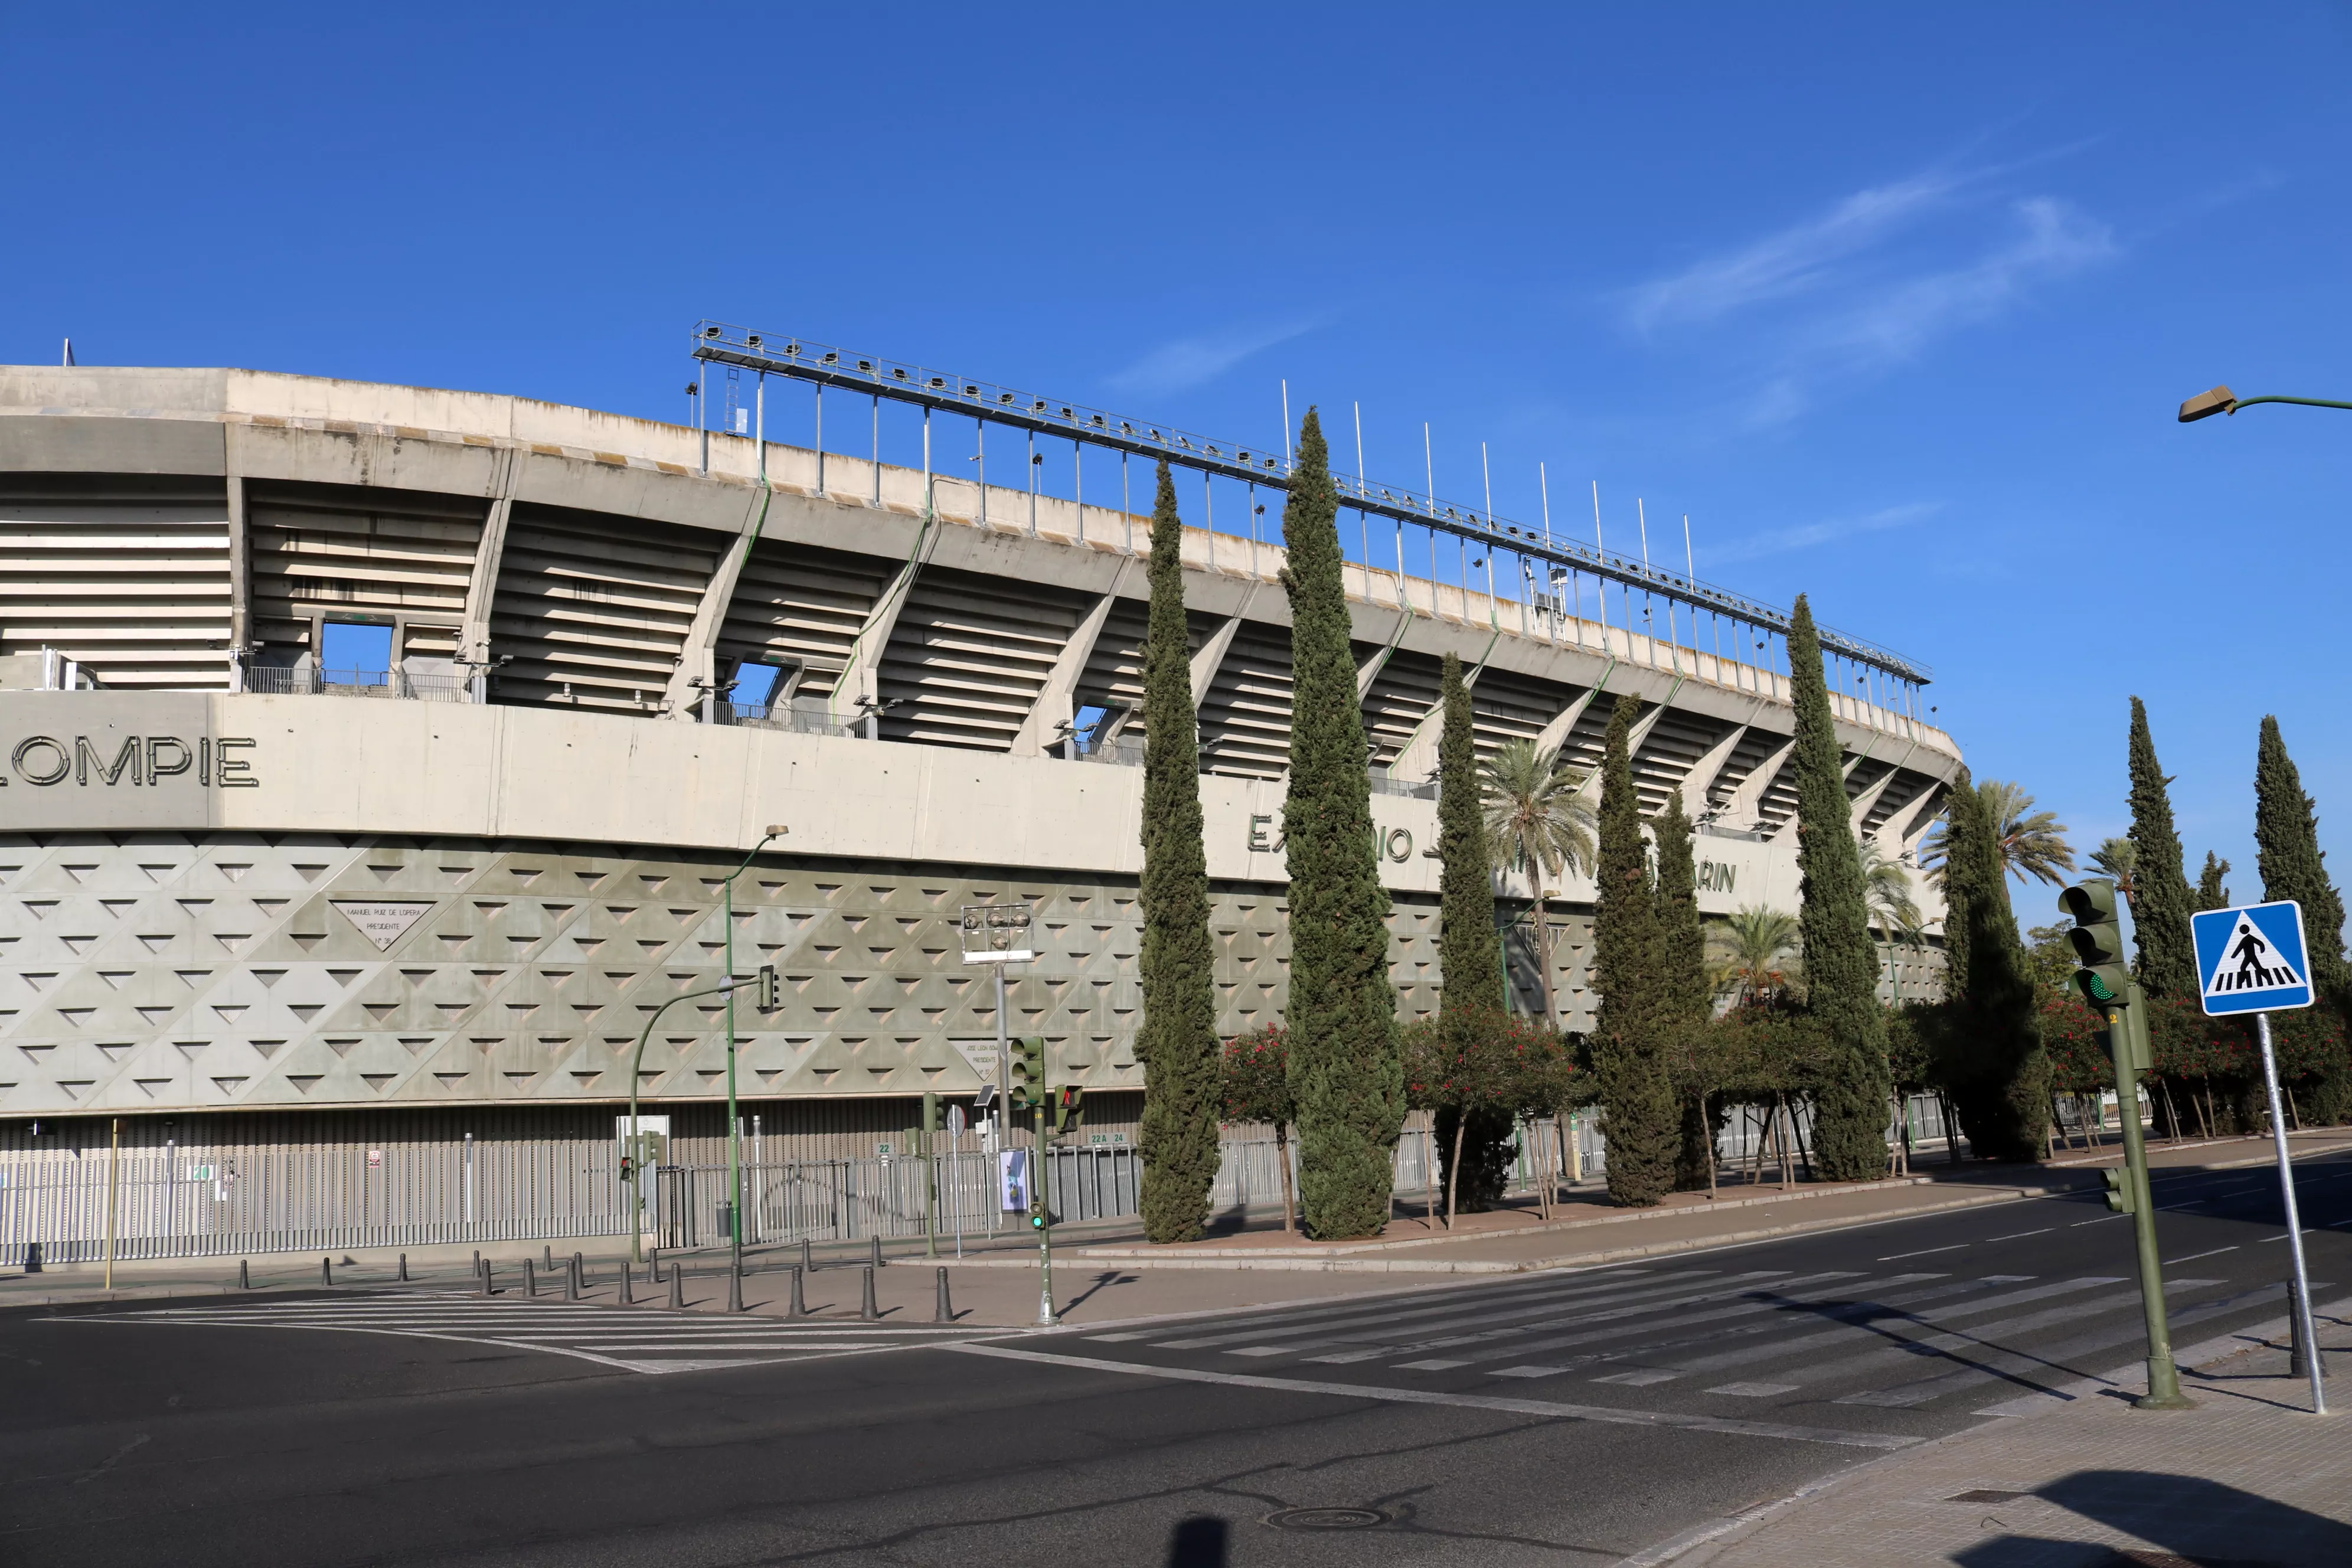 Estadio Benito Villamarin in Spain, Europe | Football - Rated 4.7